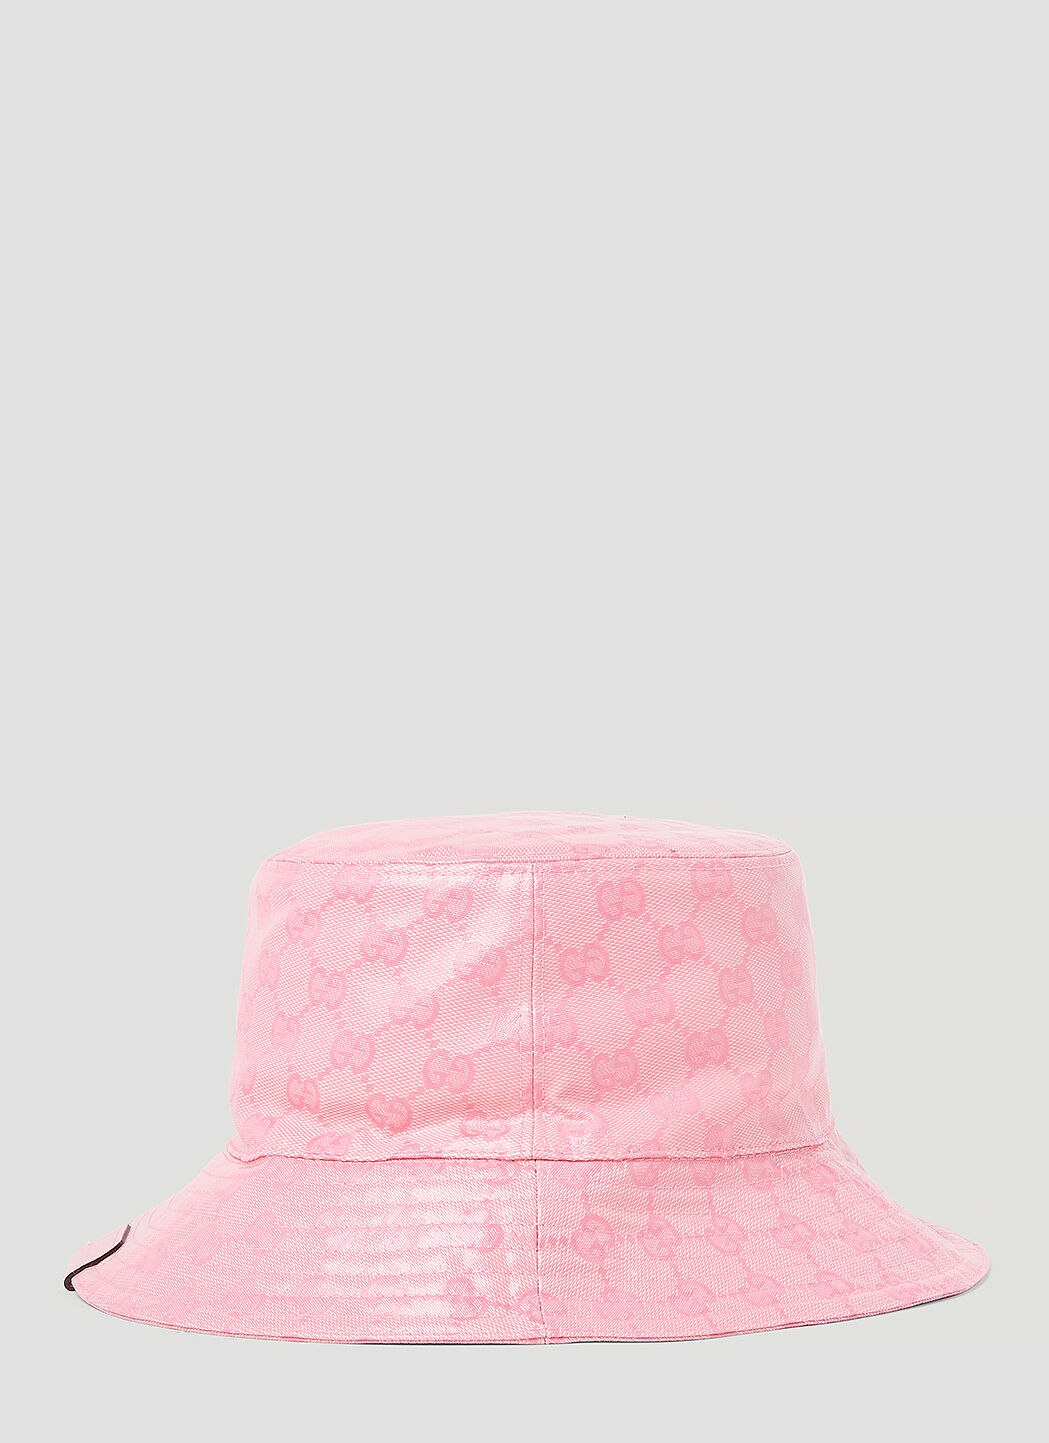 Acne Studios GG Jacquard Bucket Hat Pink acn0156032